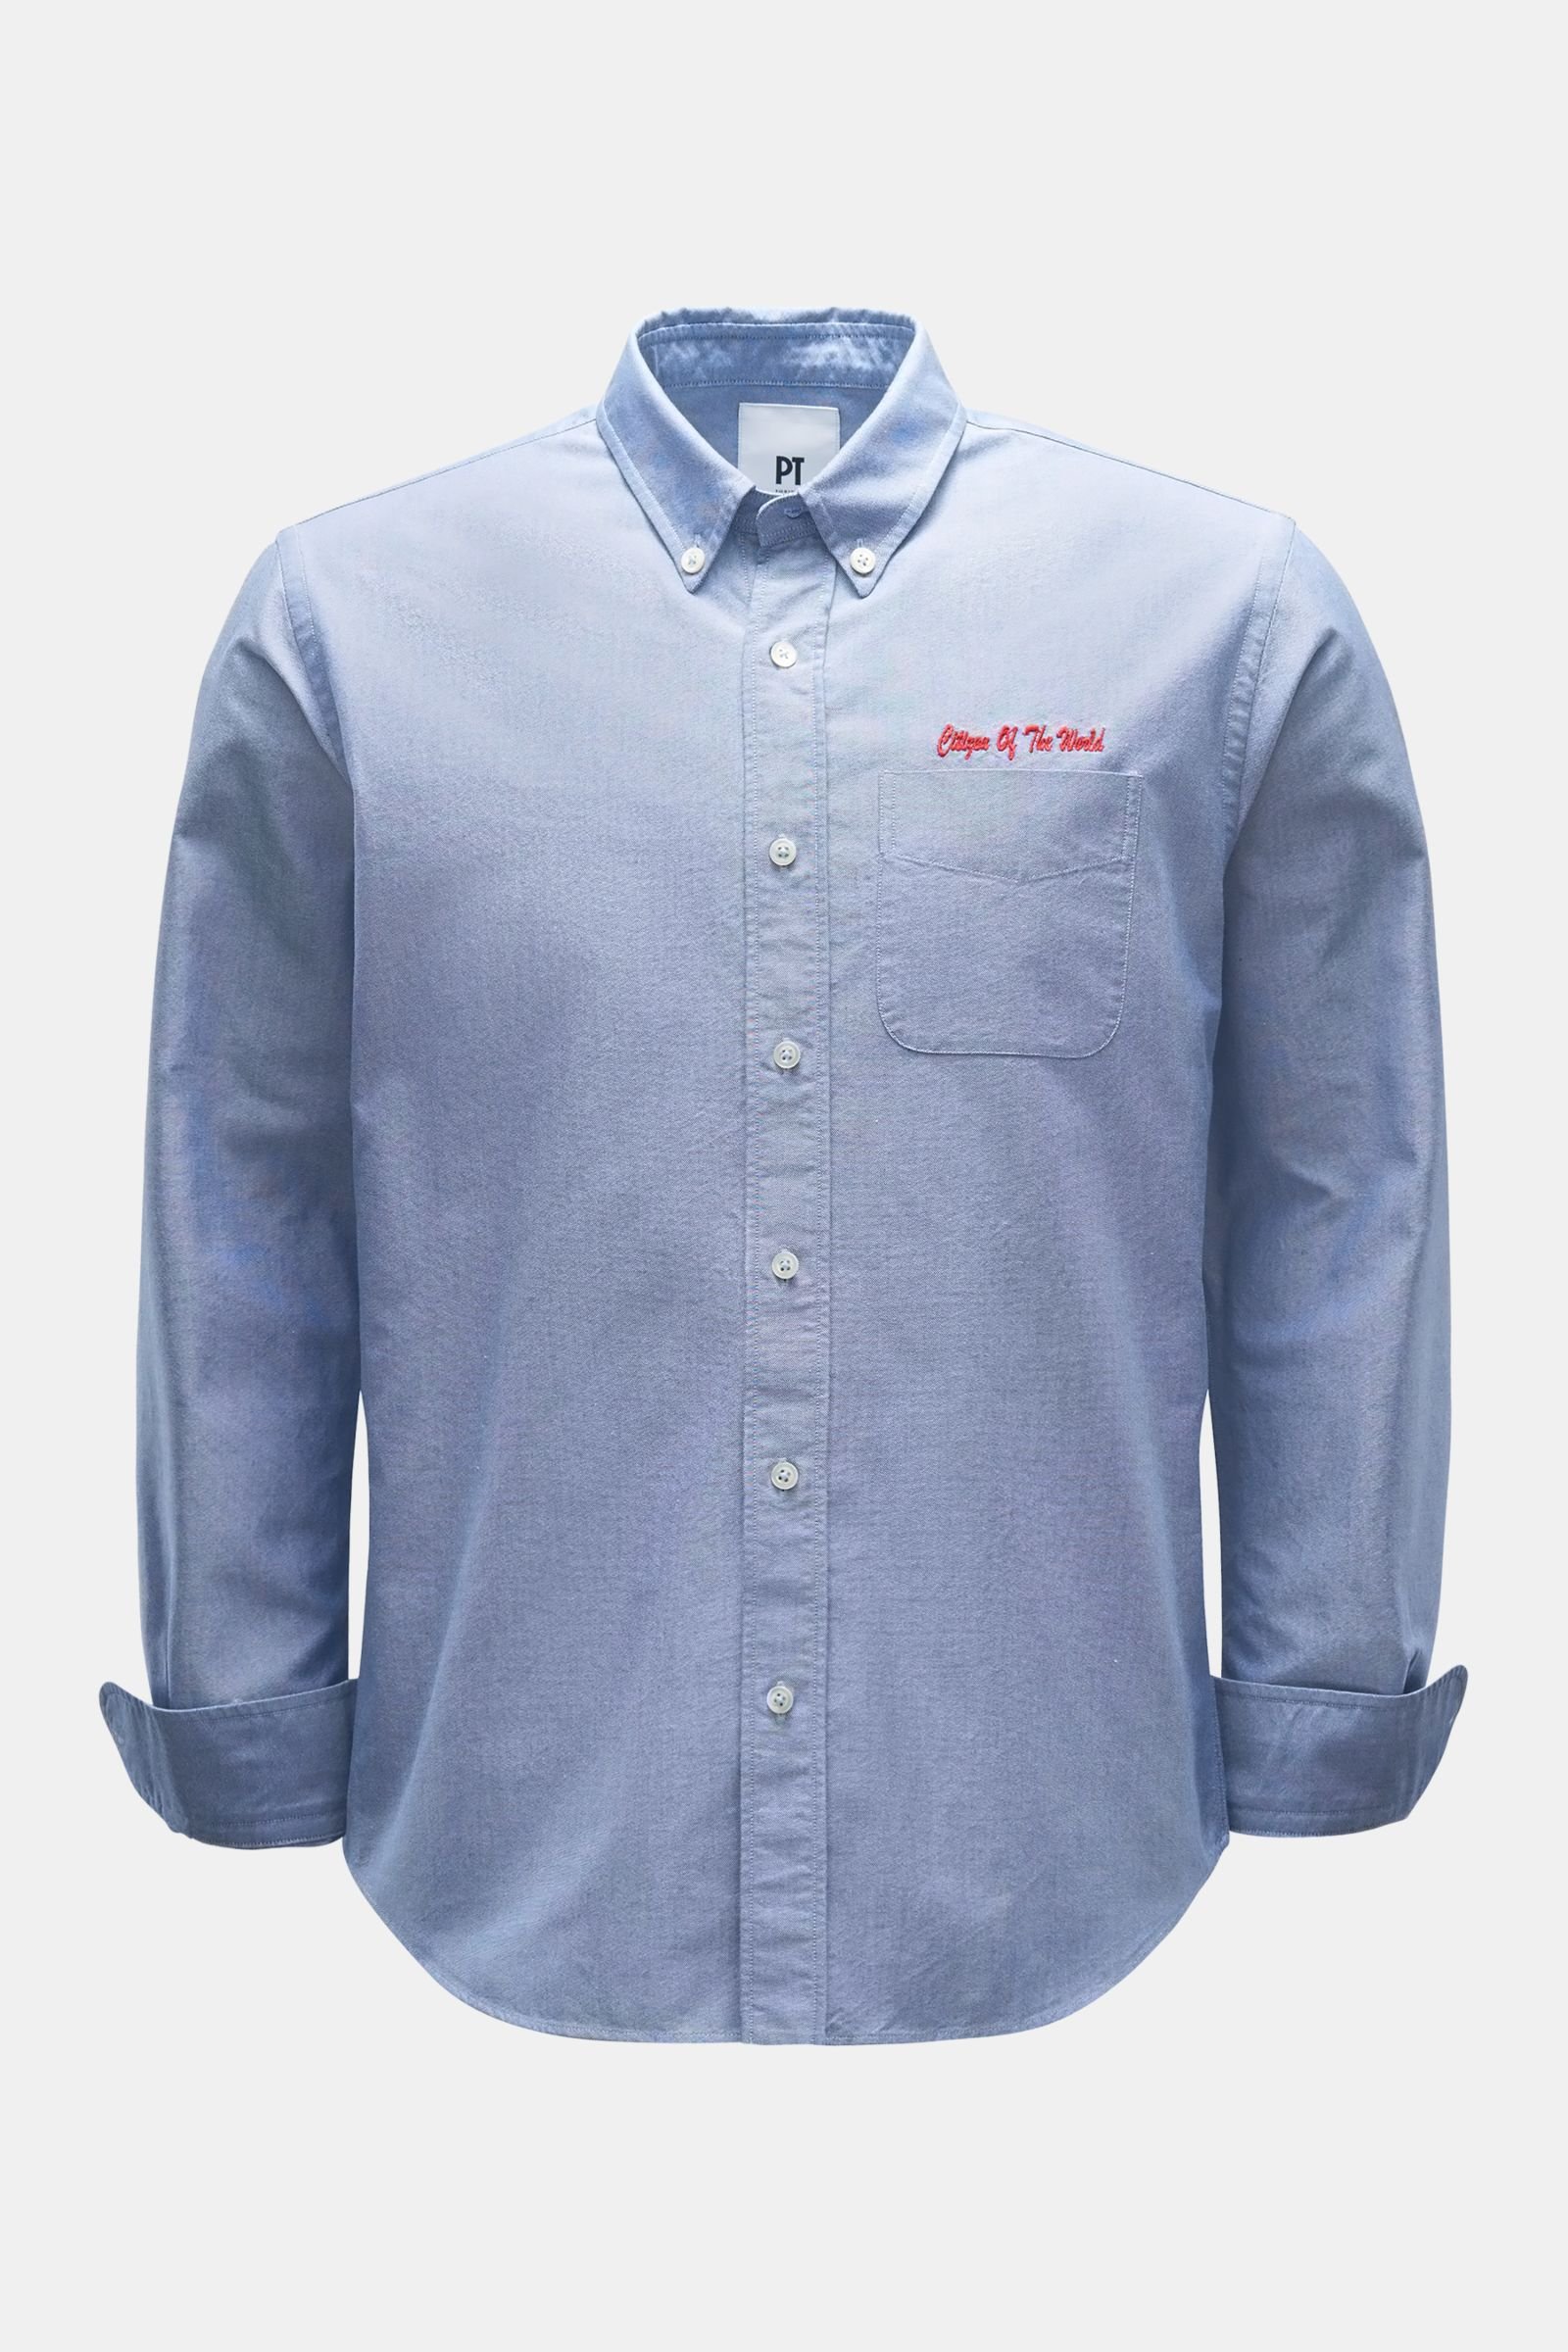 Oxford shirt button-down collar blue